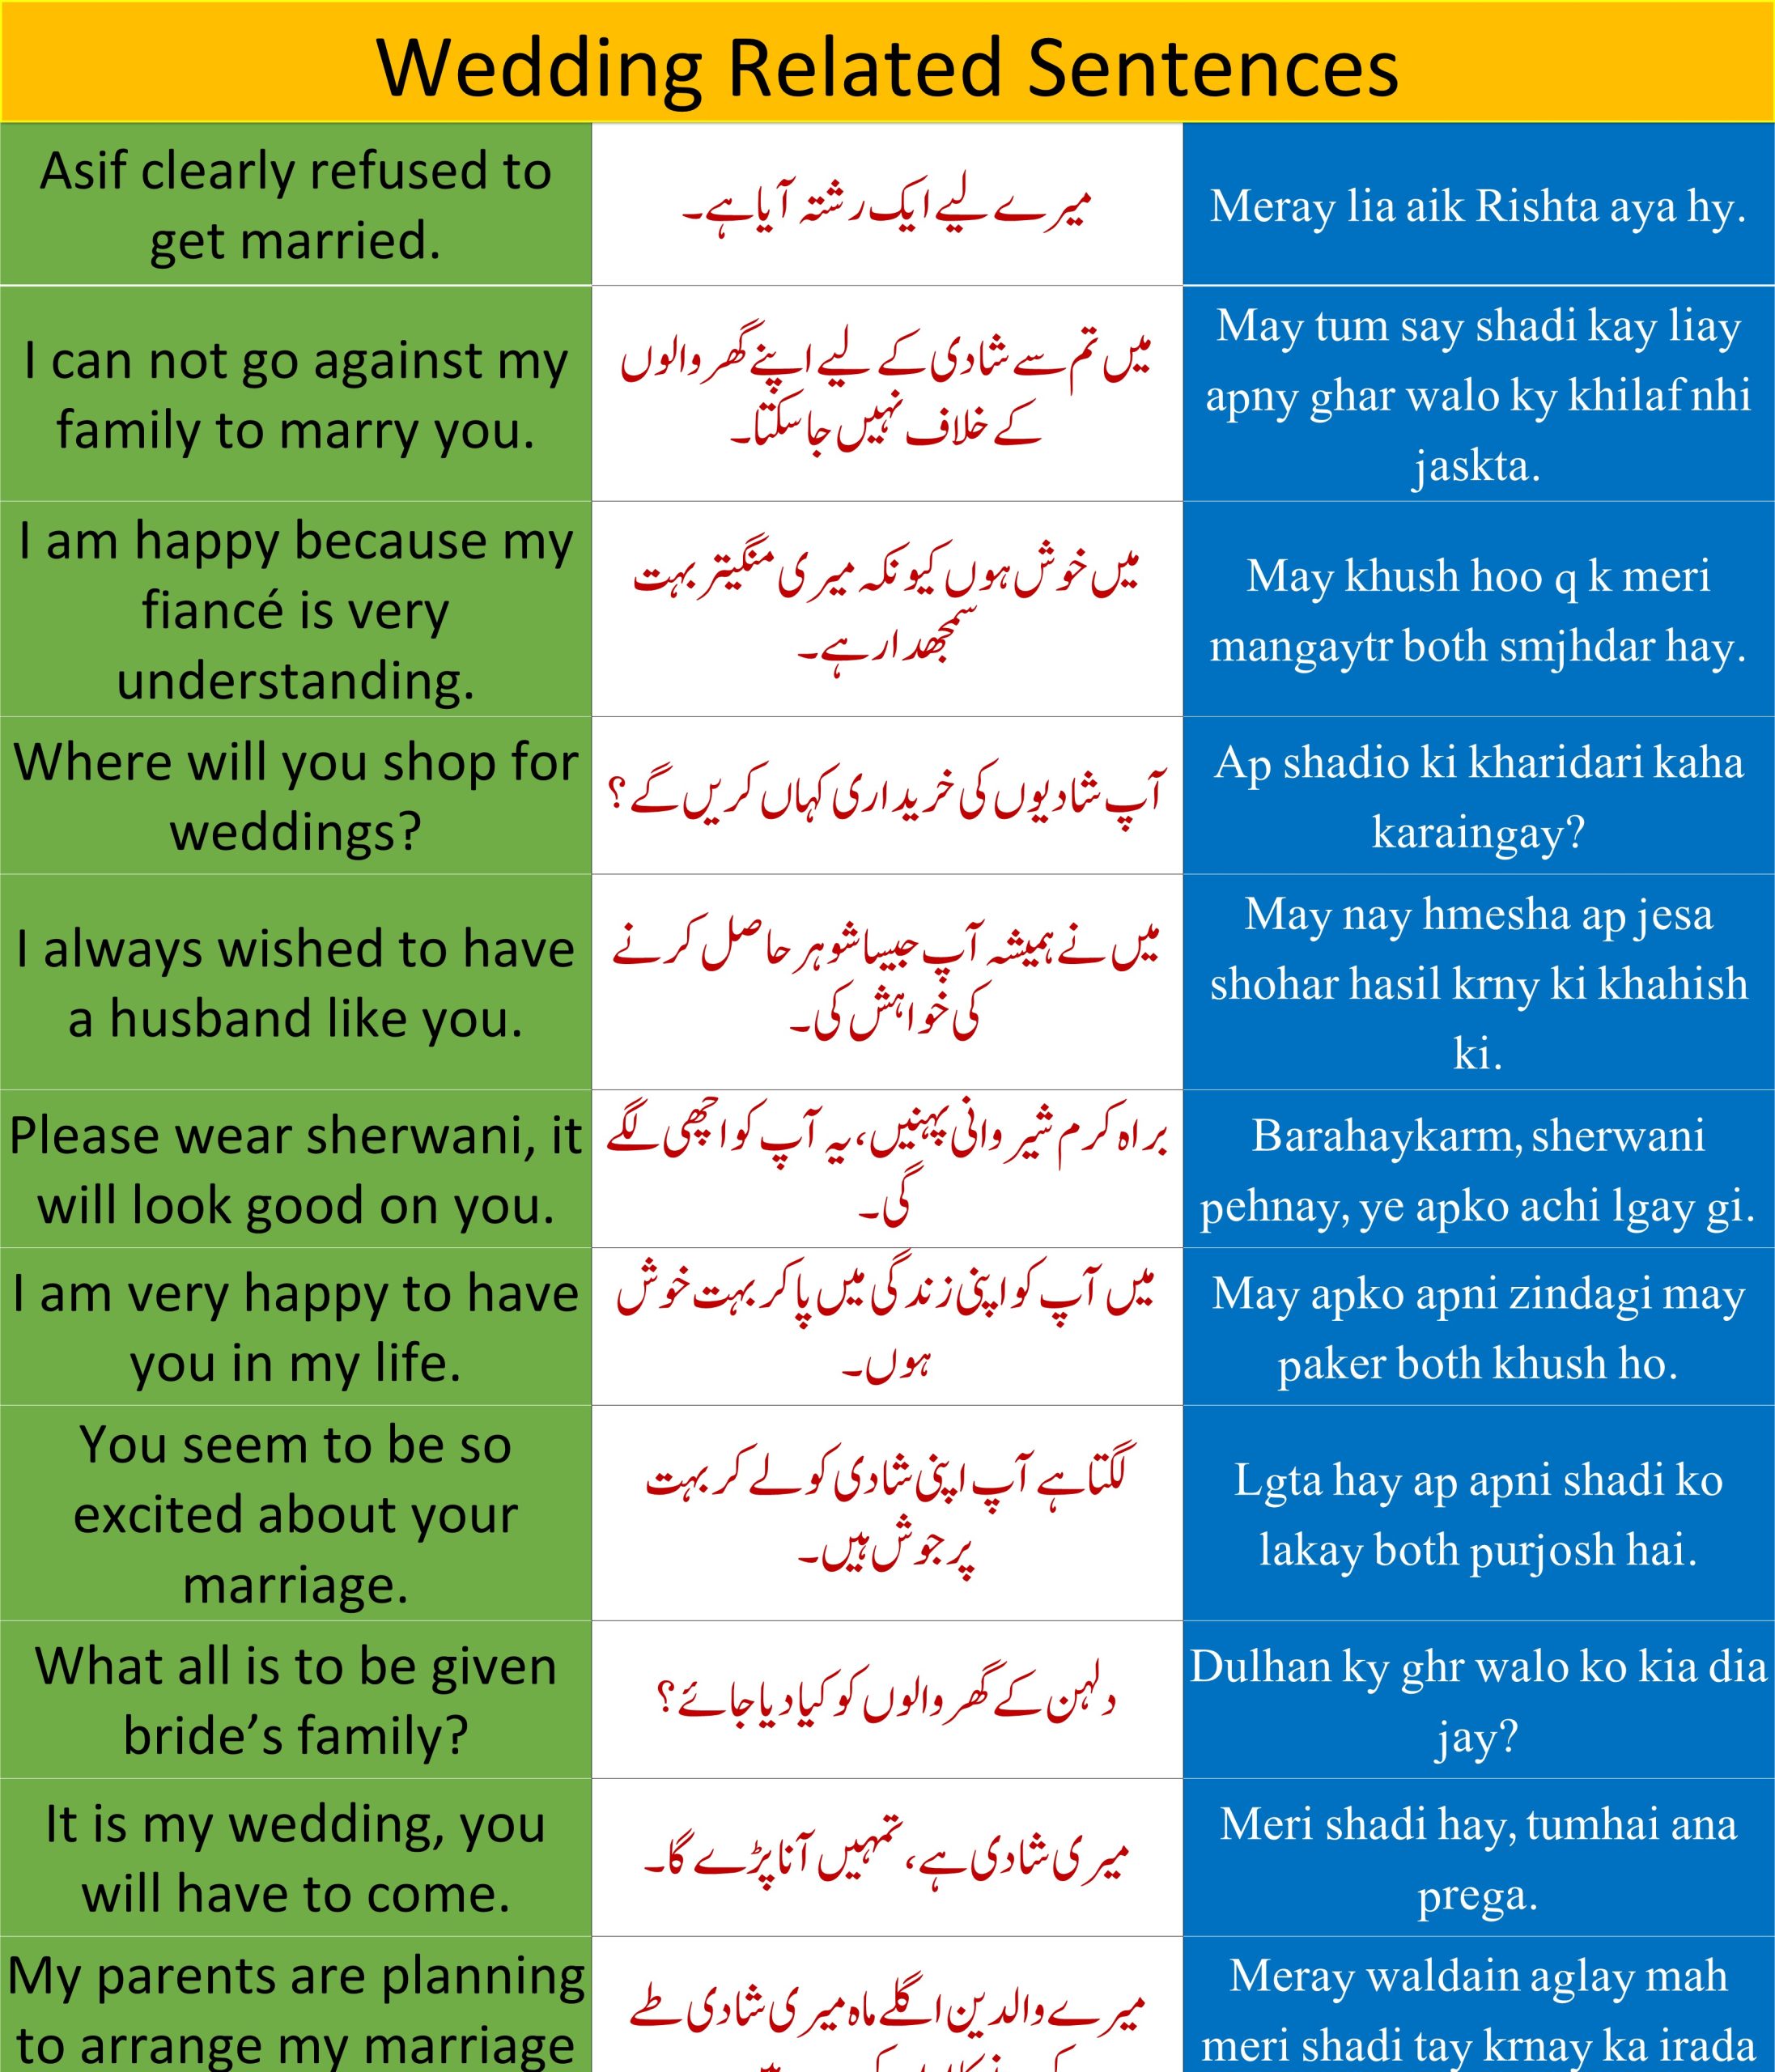 Wedding-Associated English Sentences In Urdu and Hindi translation